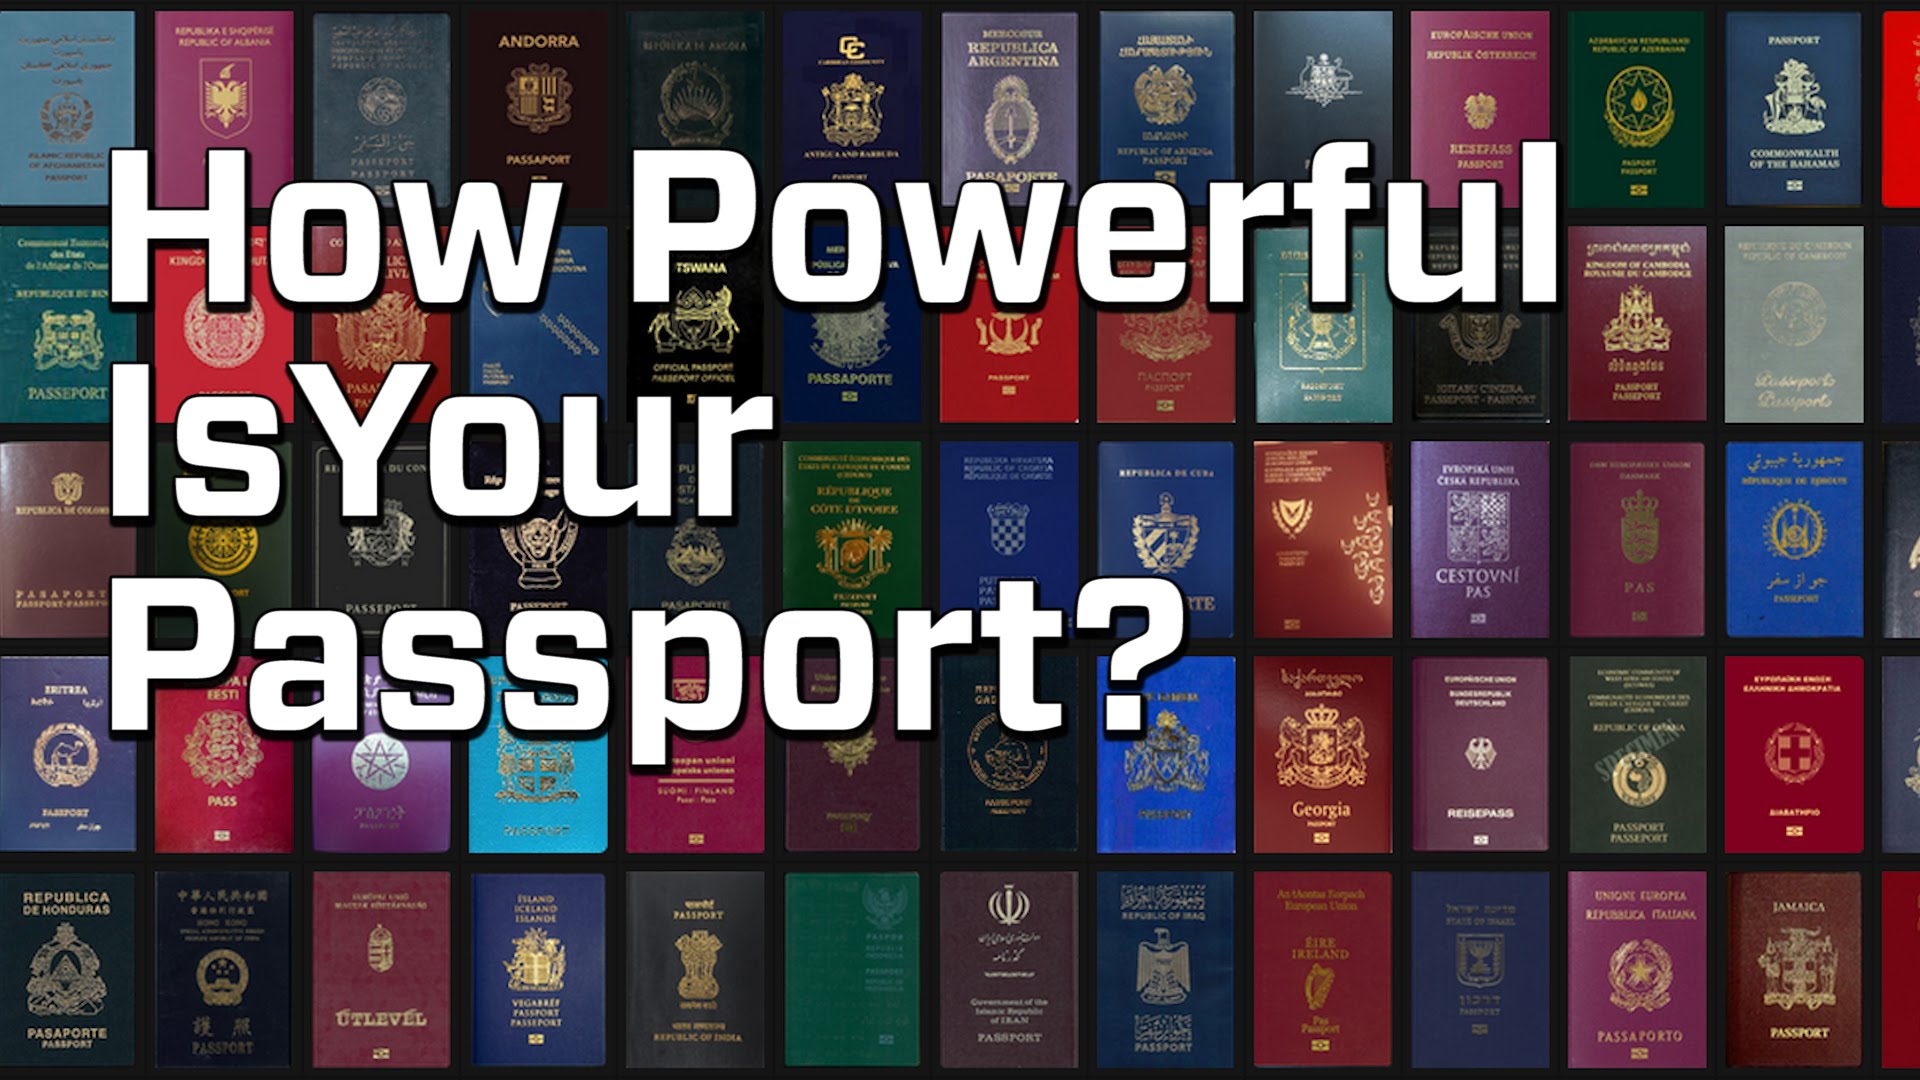 passport picture requirements